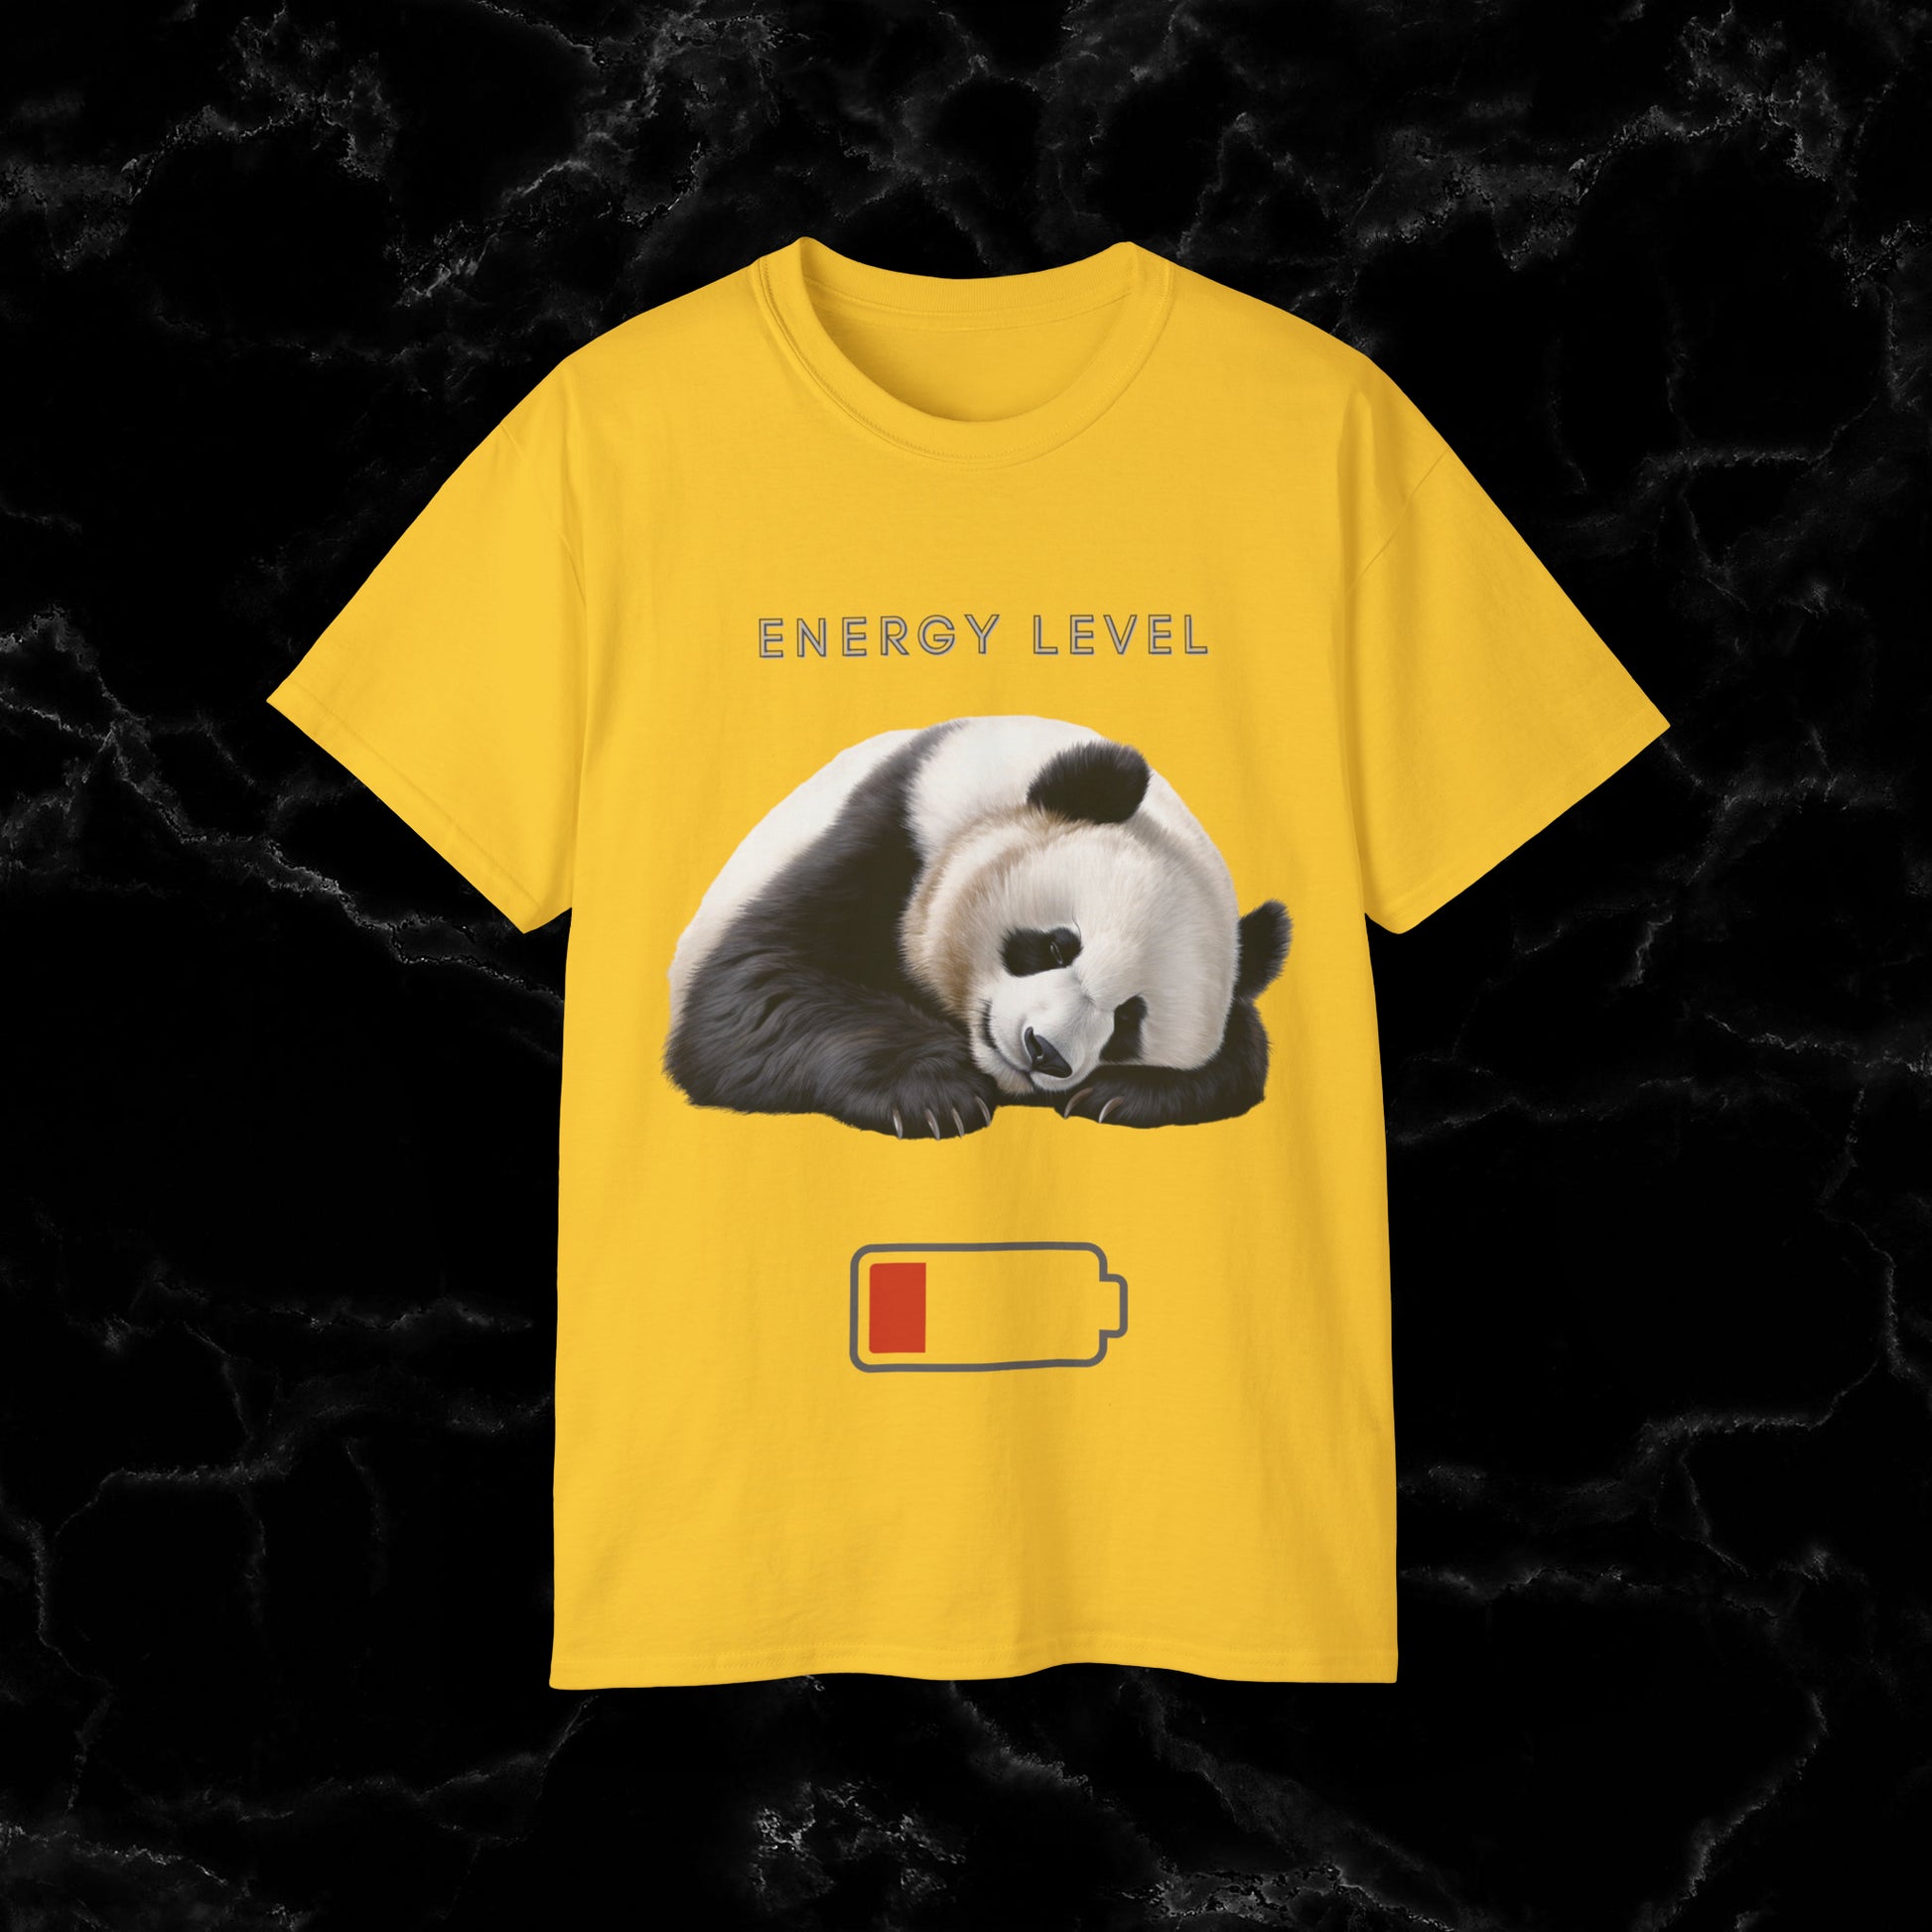 Nap Time Panda Unisex Funny Tee - Hilarious Panda Nap Design - Energy Level T-Shirt Daisy S 